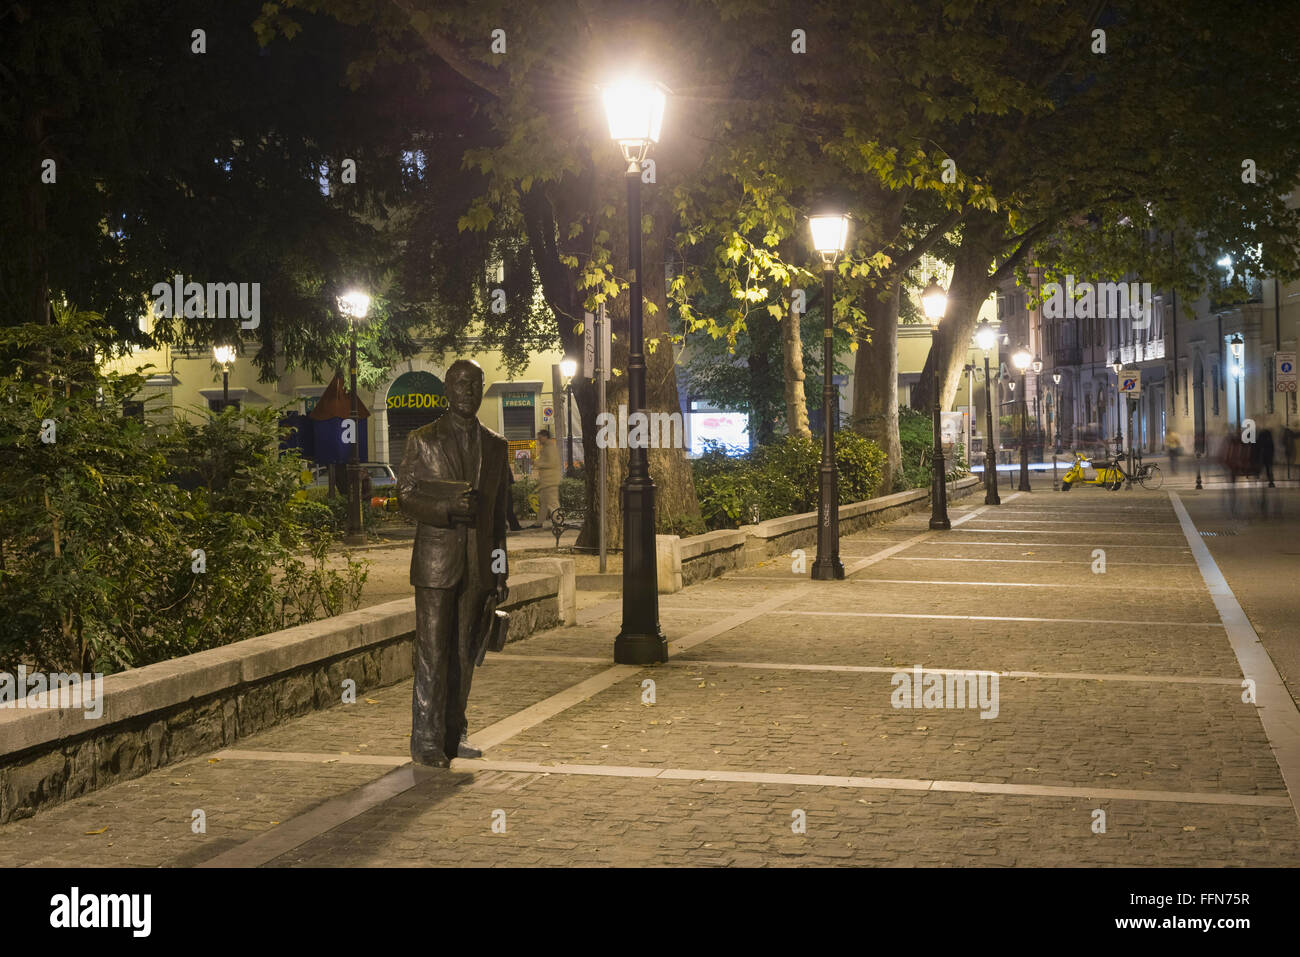 Statue of the famous author, Italo Svevo in Trieste city centre, Italy, Europe Stock Photo